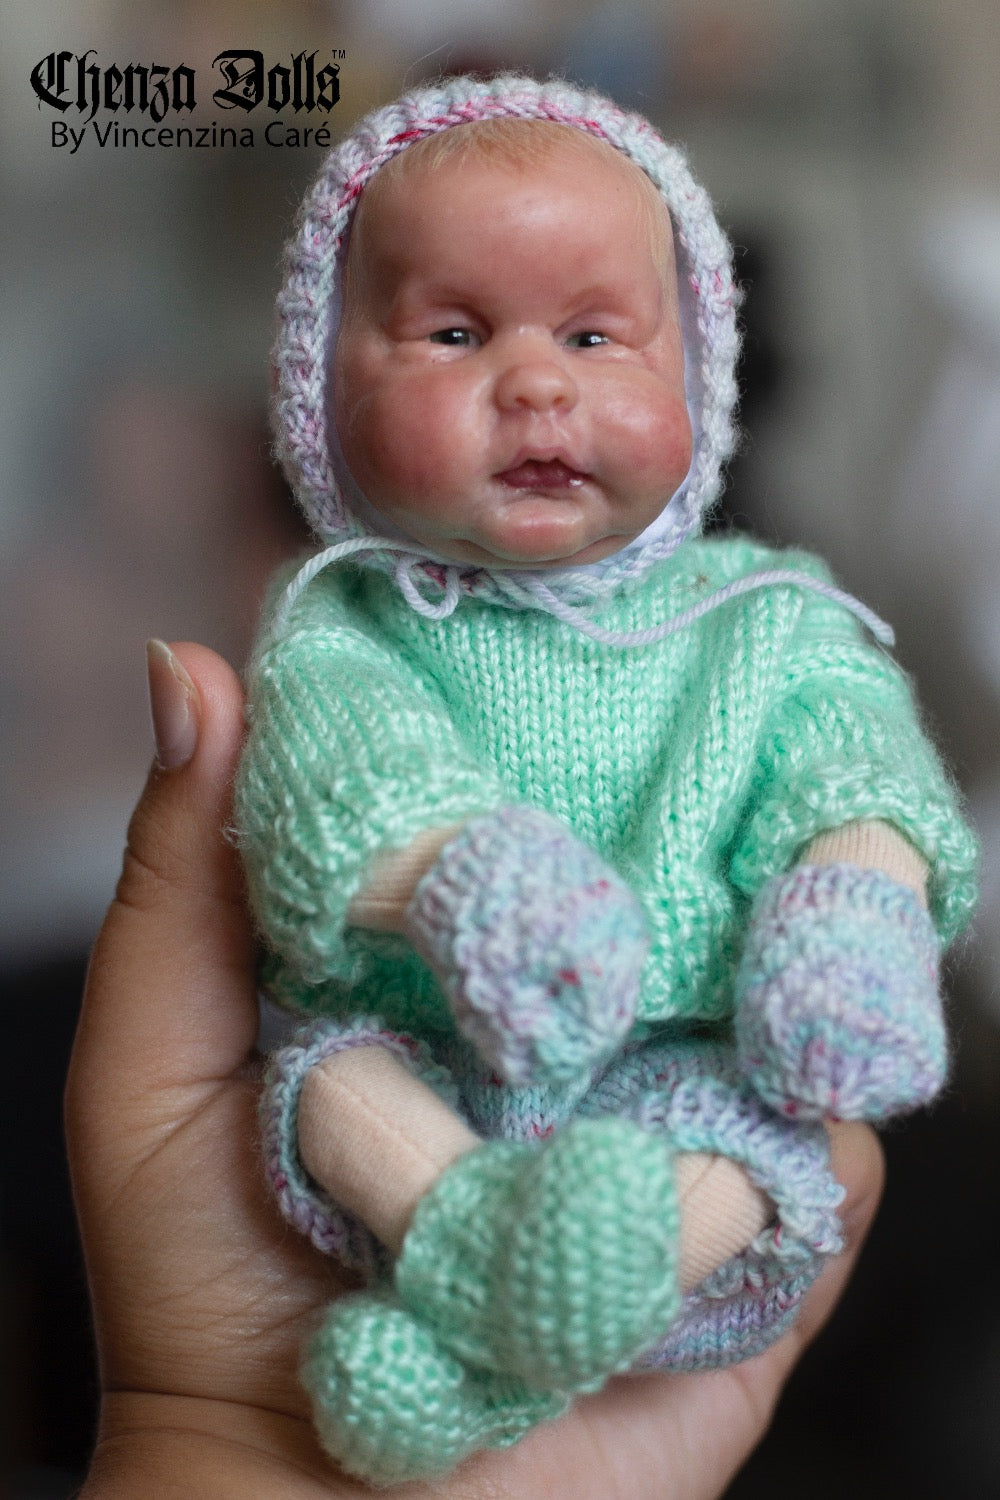 Pascal OOAK Bonnet baby doll